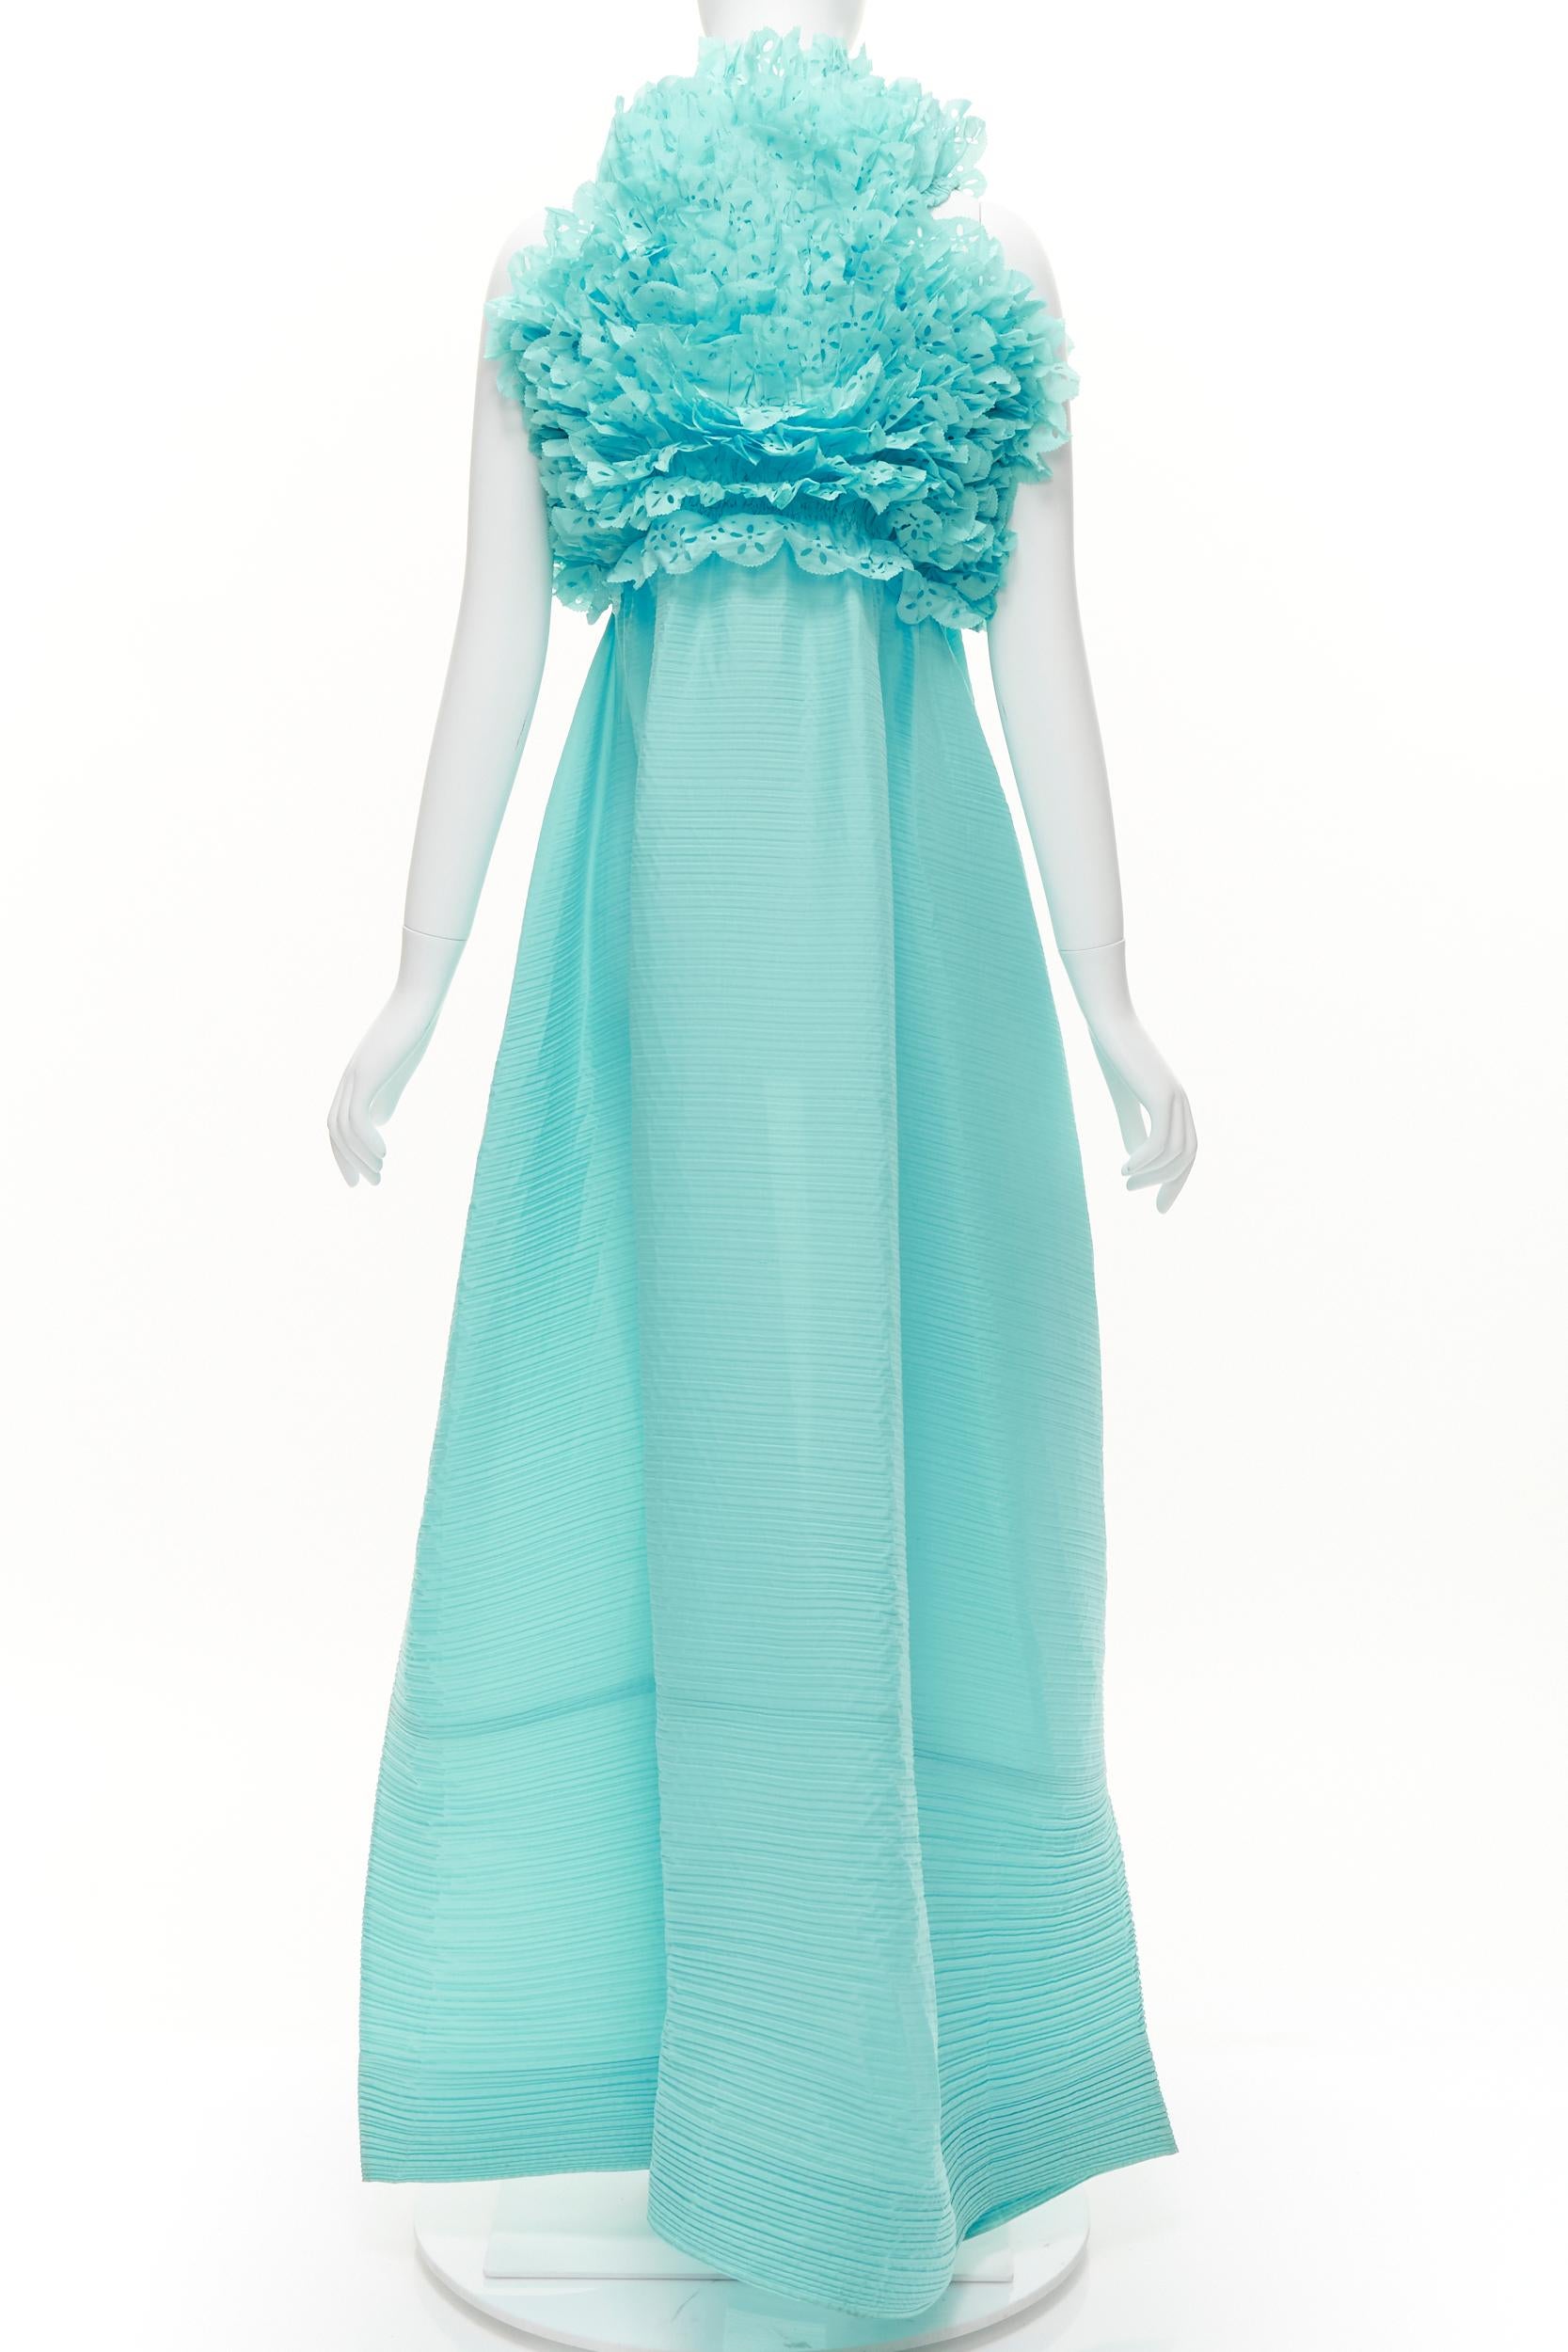 rare ISSEY MIYAKE sky blue laser cut ruffle high neck evening gown dress M 1